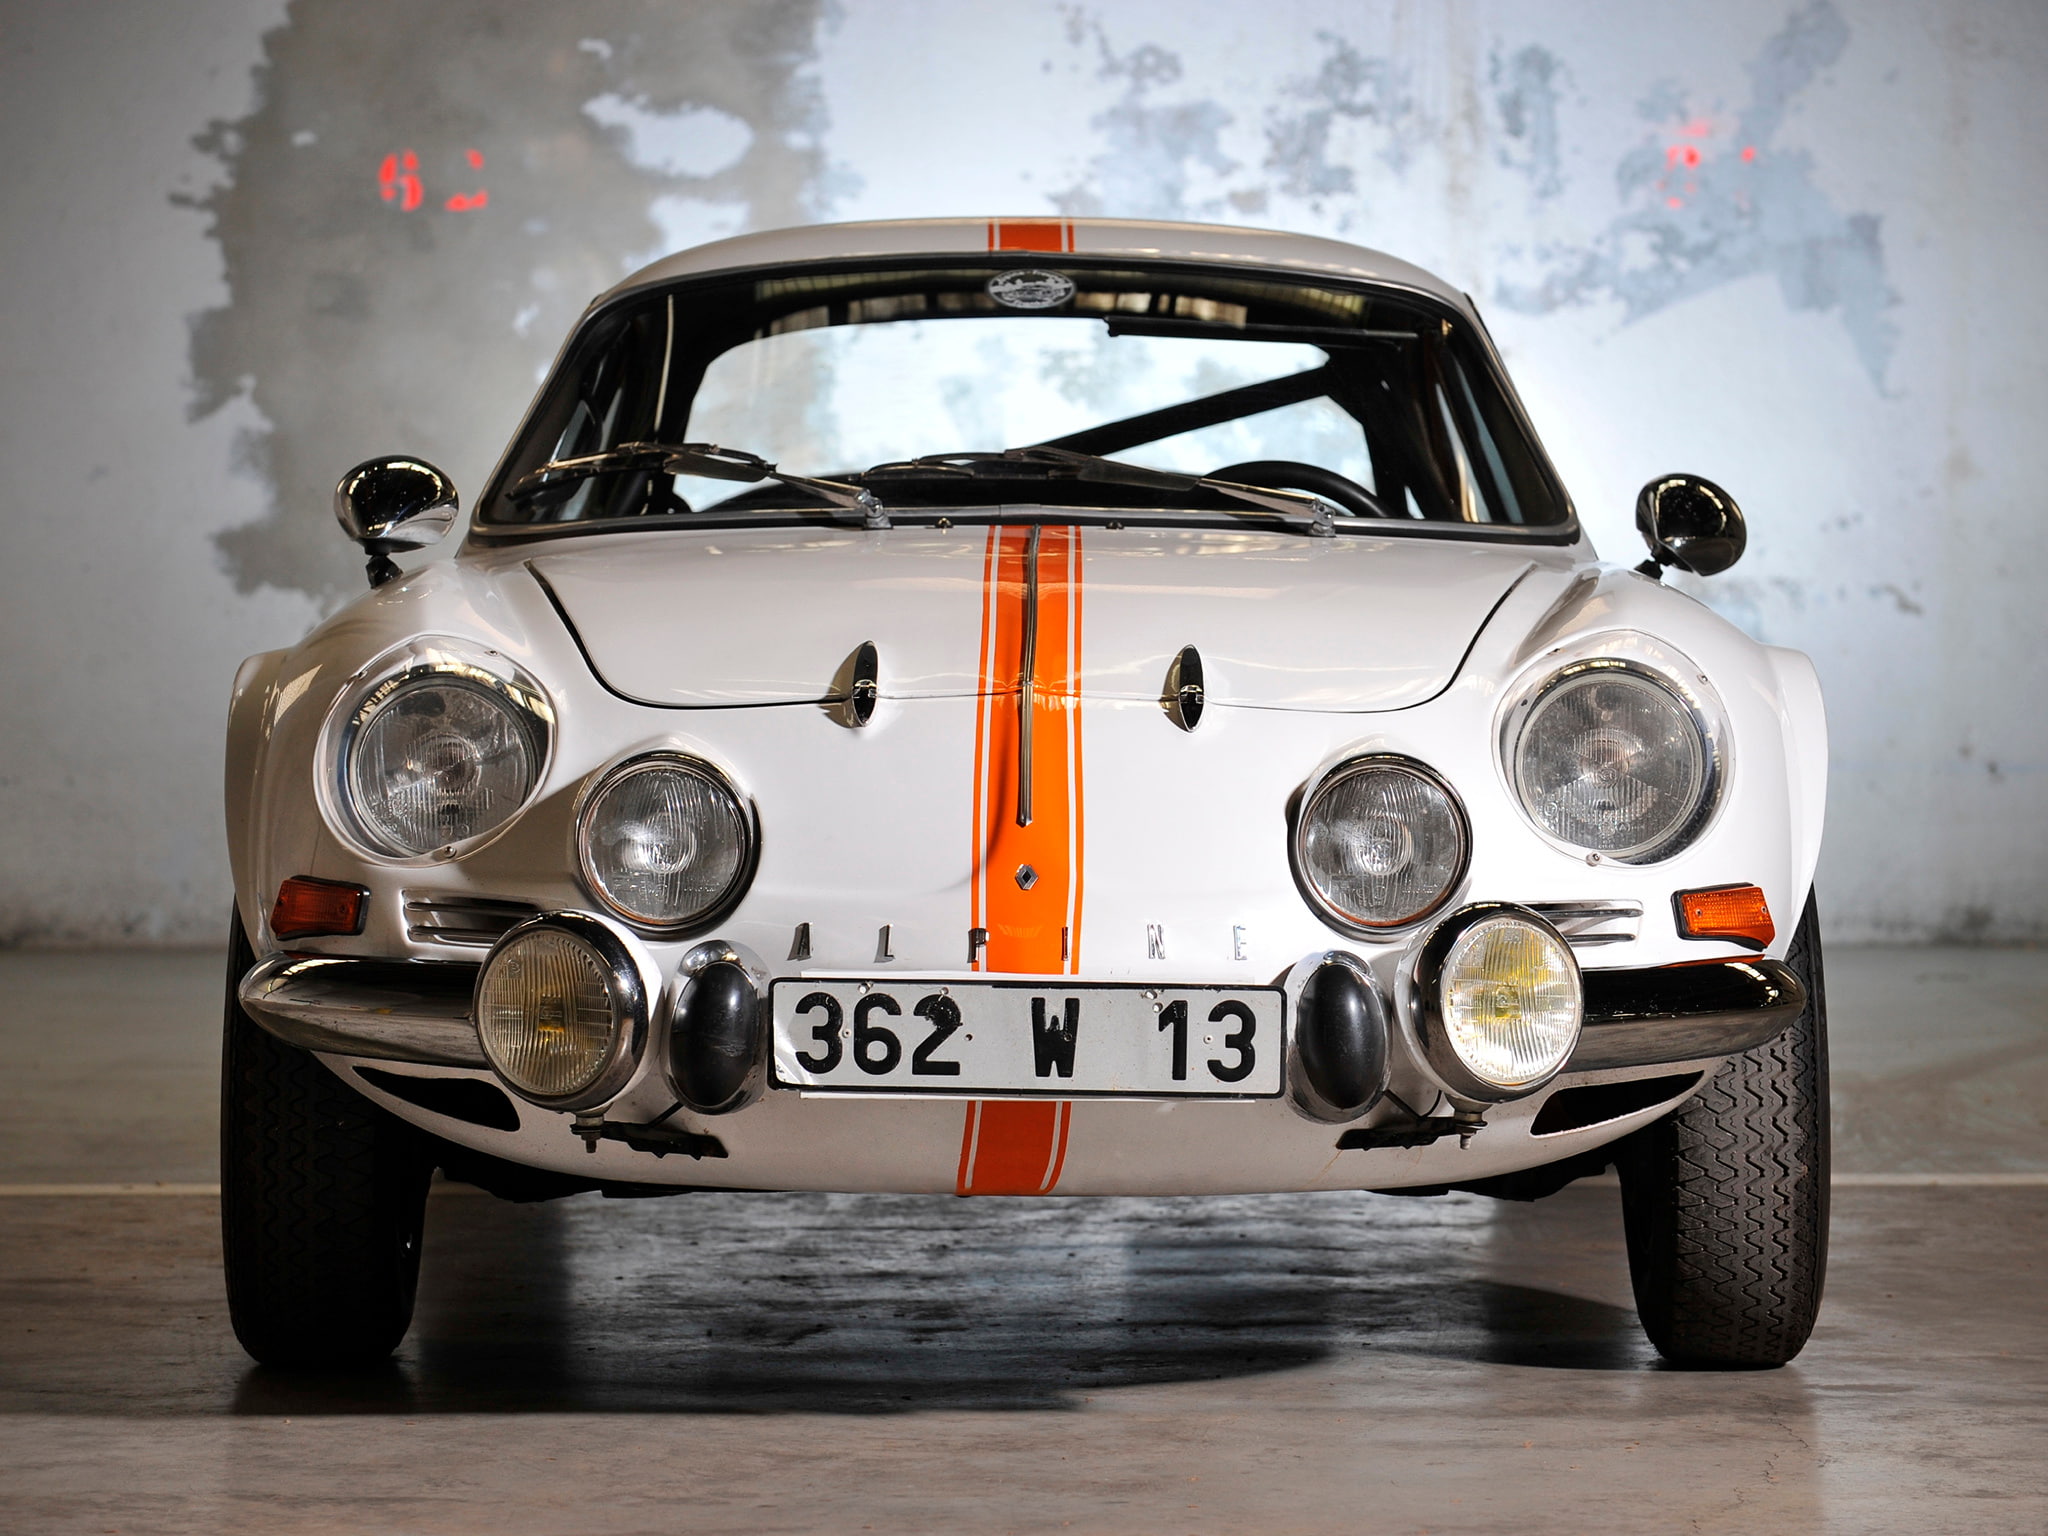 1961, a110, alpine, classic, renault